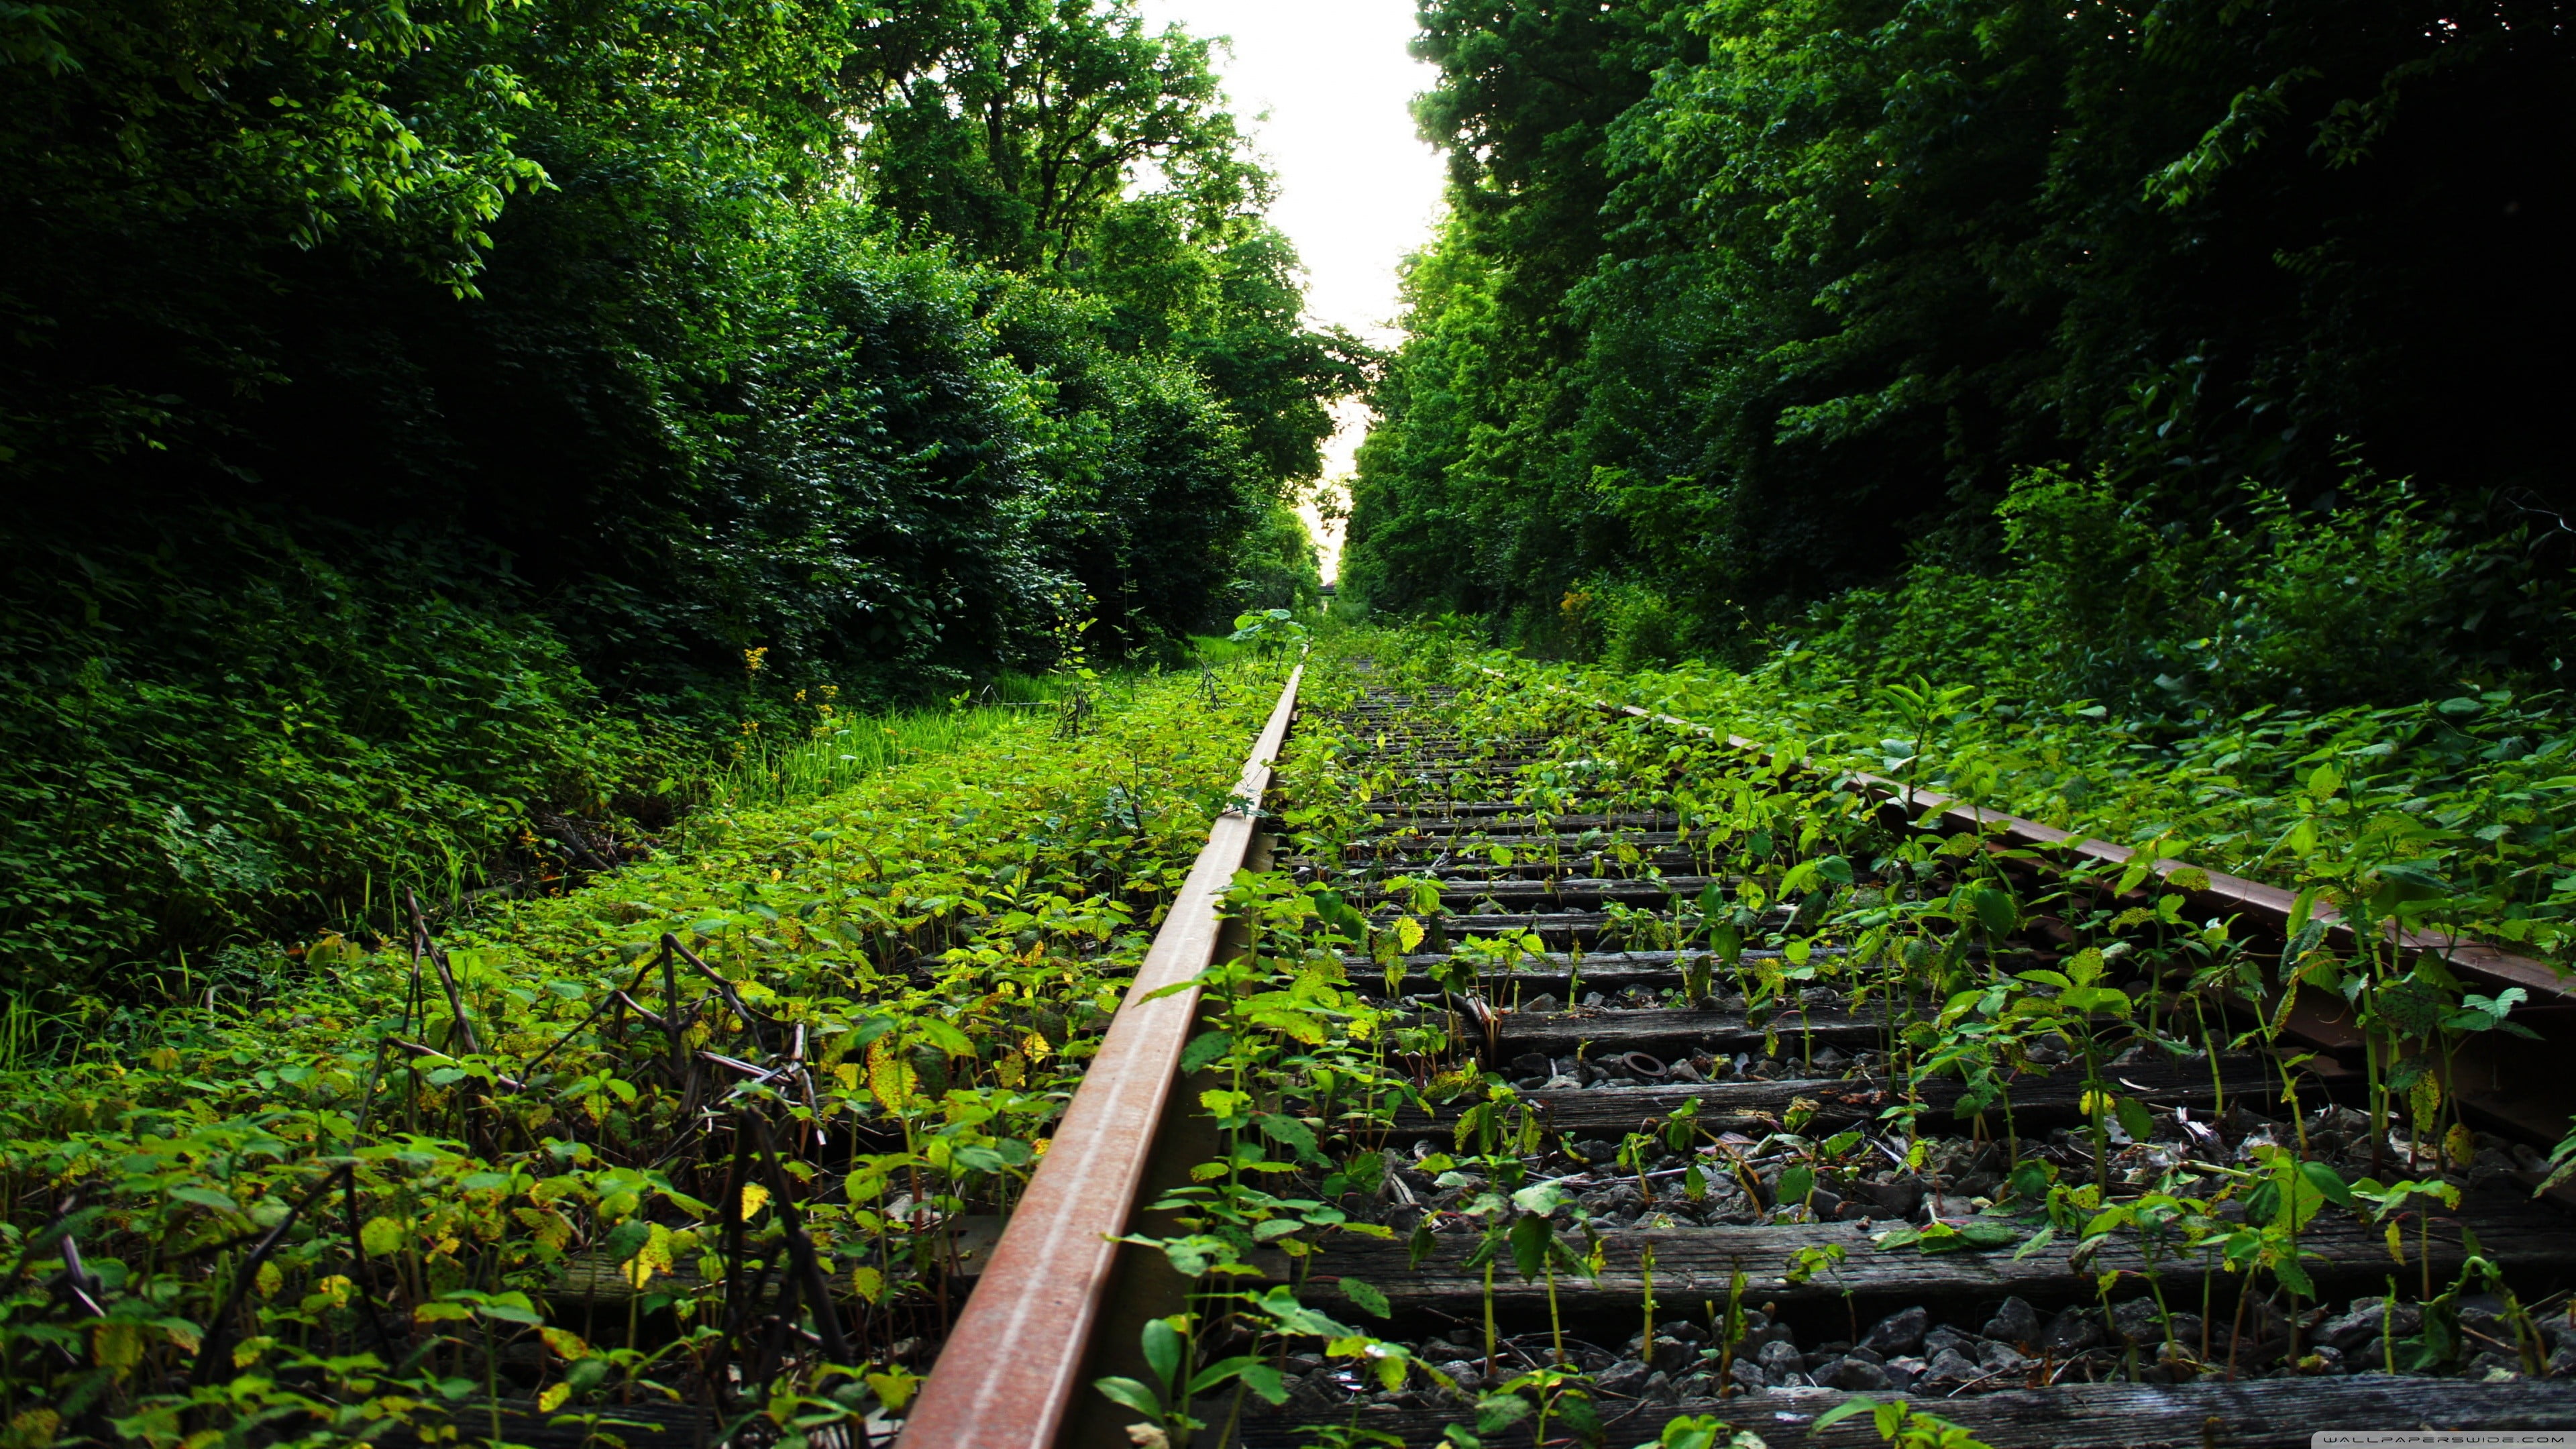 brown metal train rail, trees, railway, nature, plants, abandoned